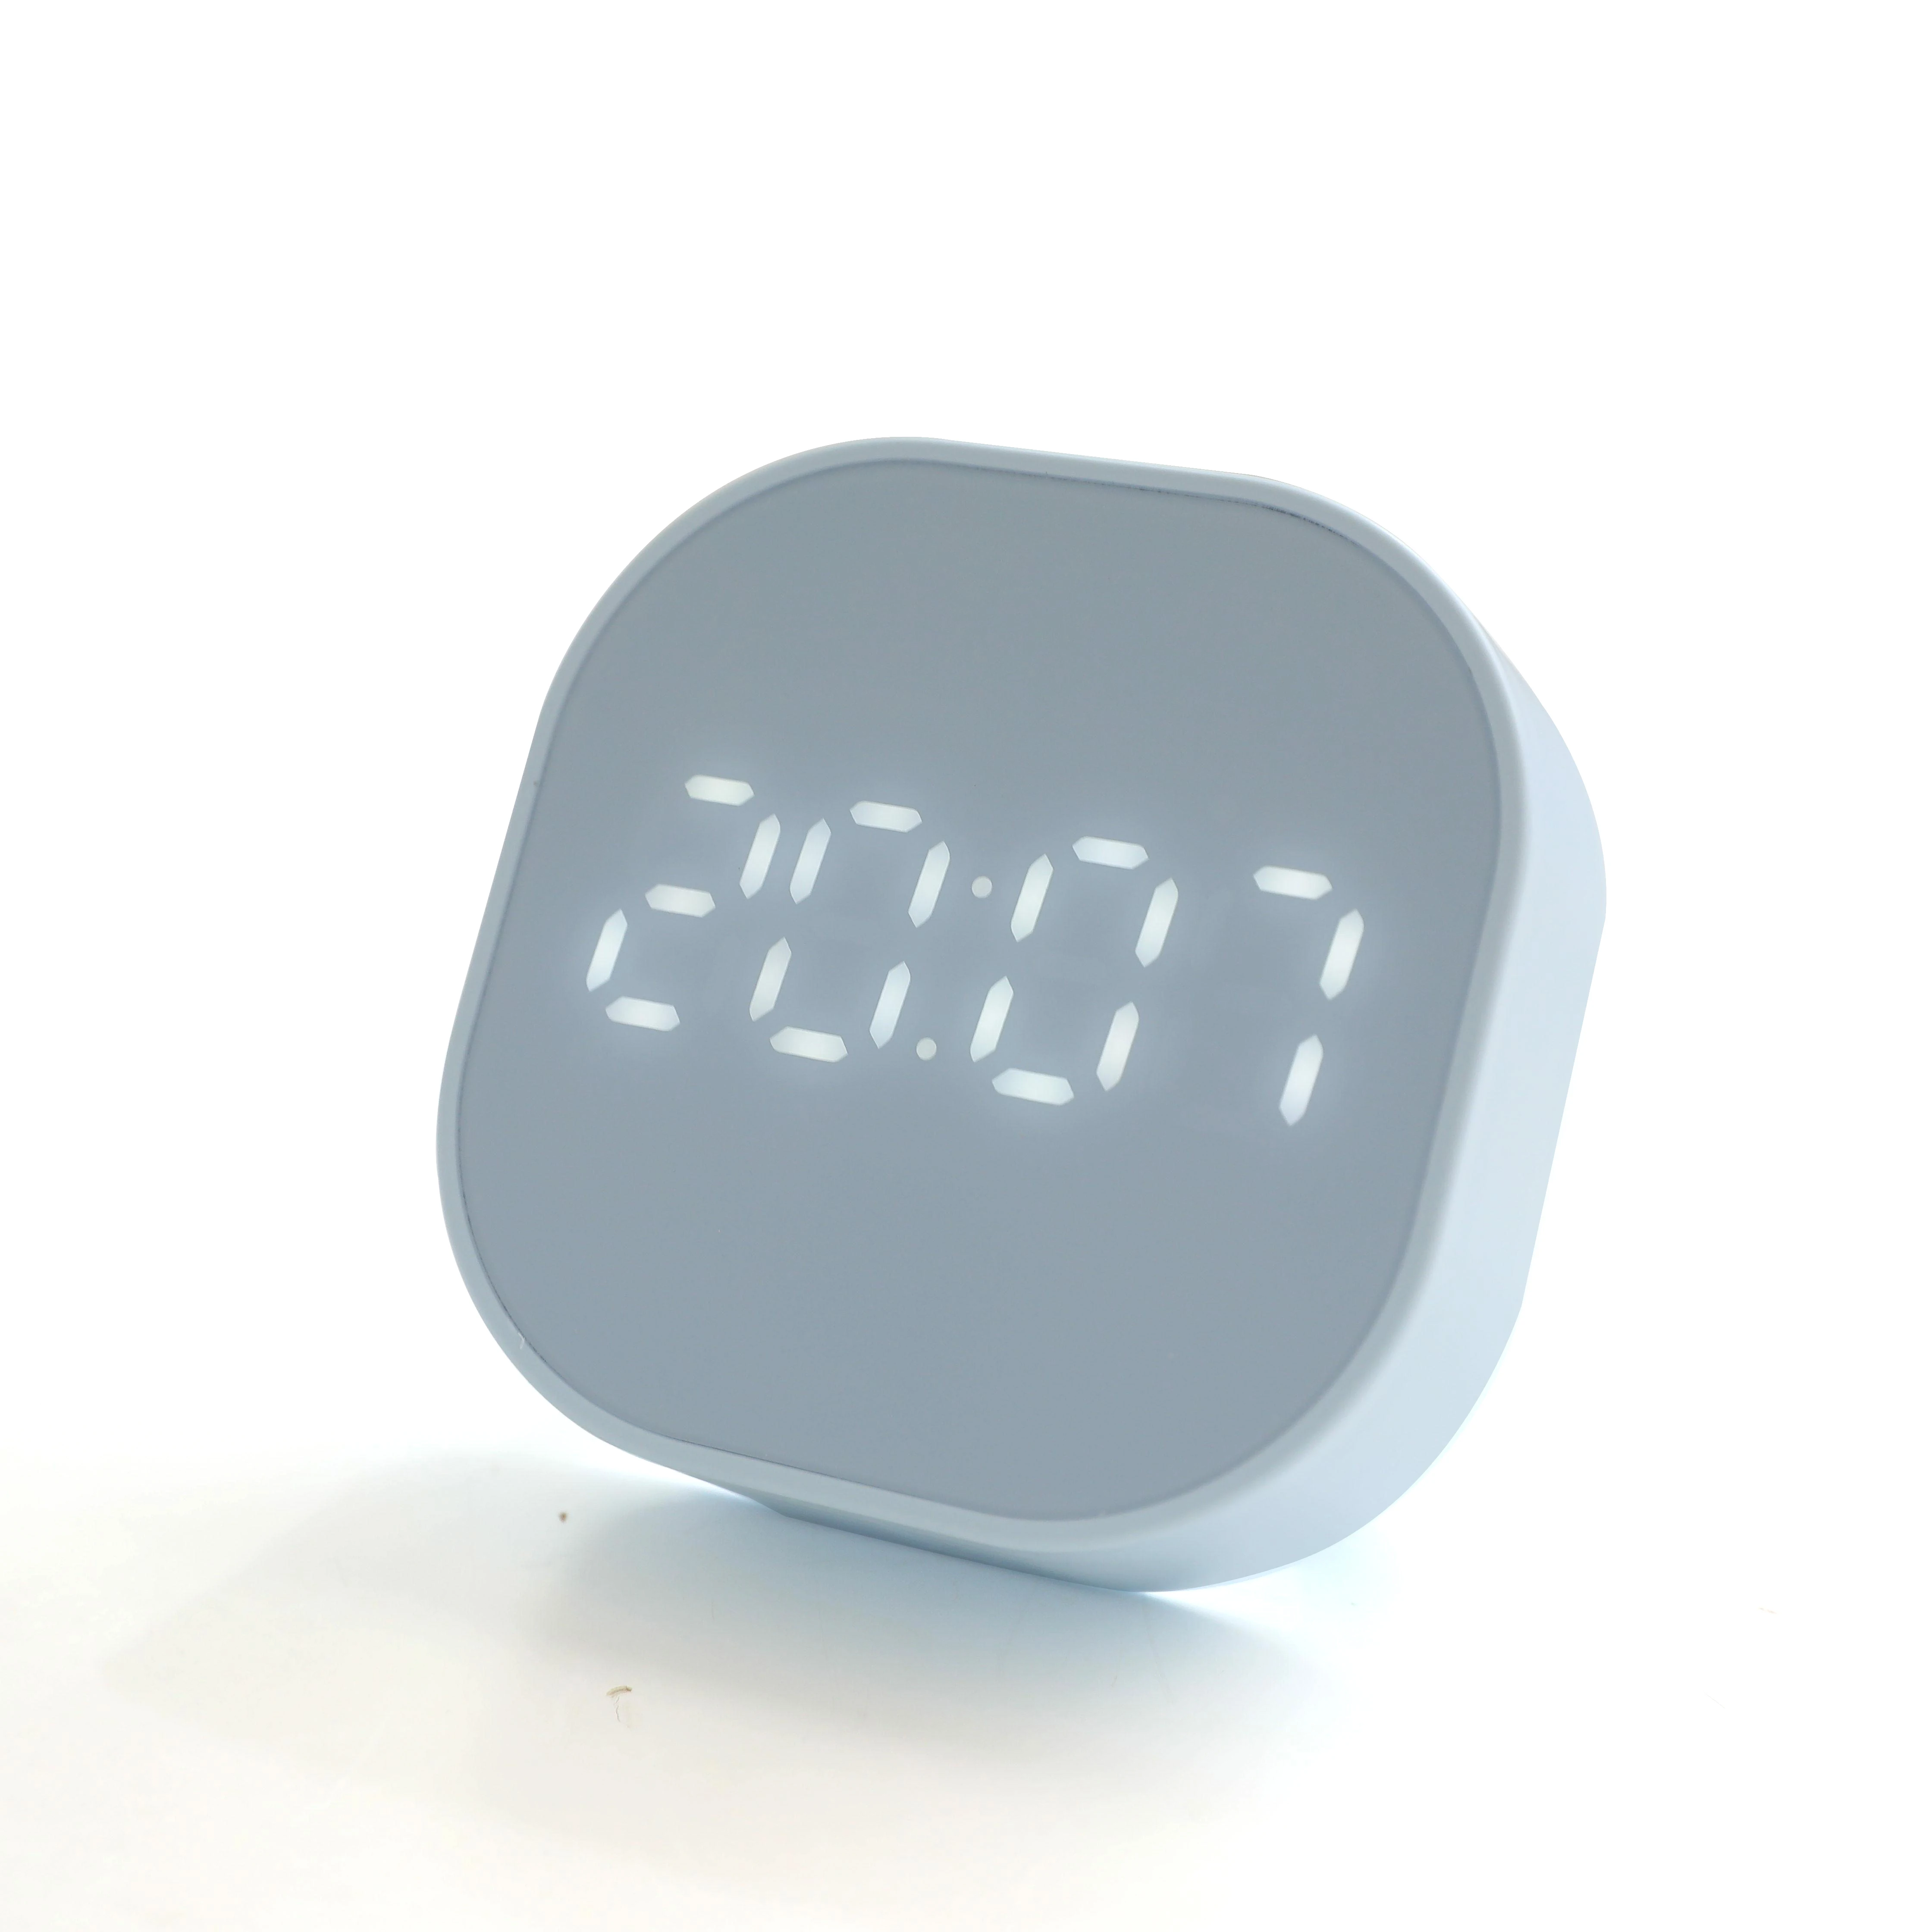 2020 LED Light Mini Modern Cube Desk & Table Clocks ,Smart Digital Kids Led Alarm Clock Displays Time